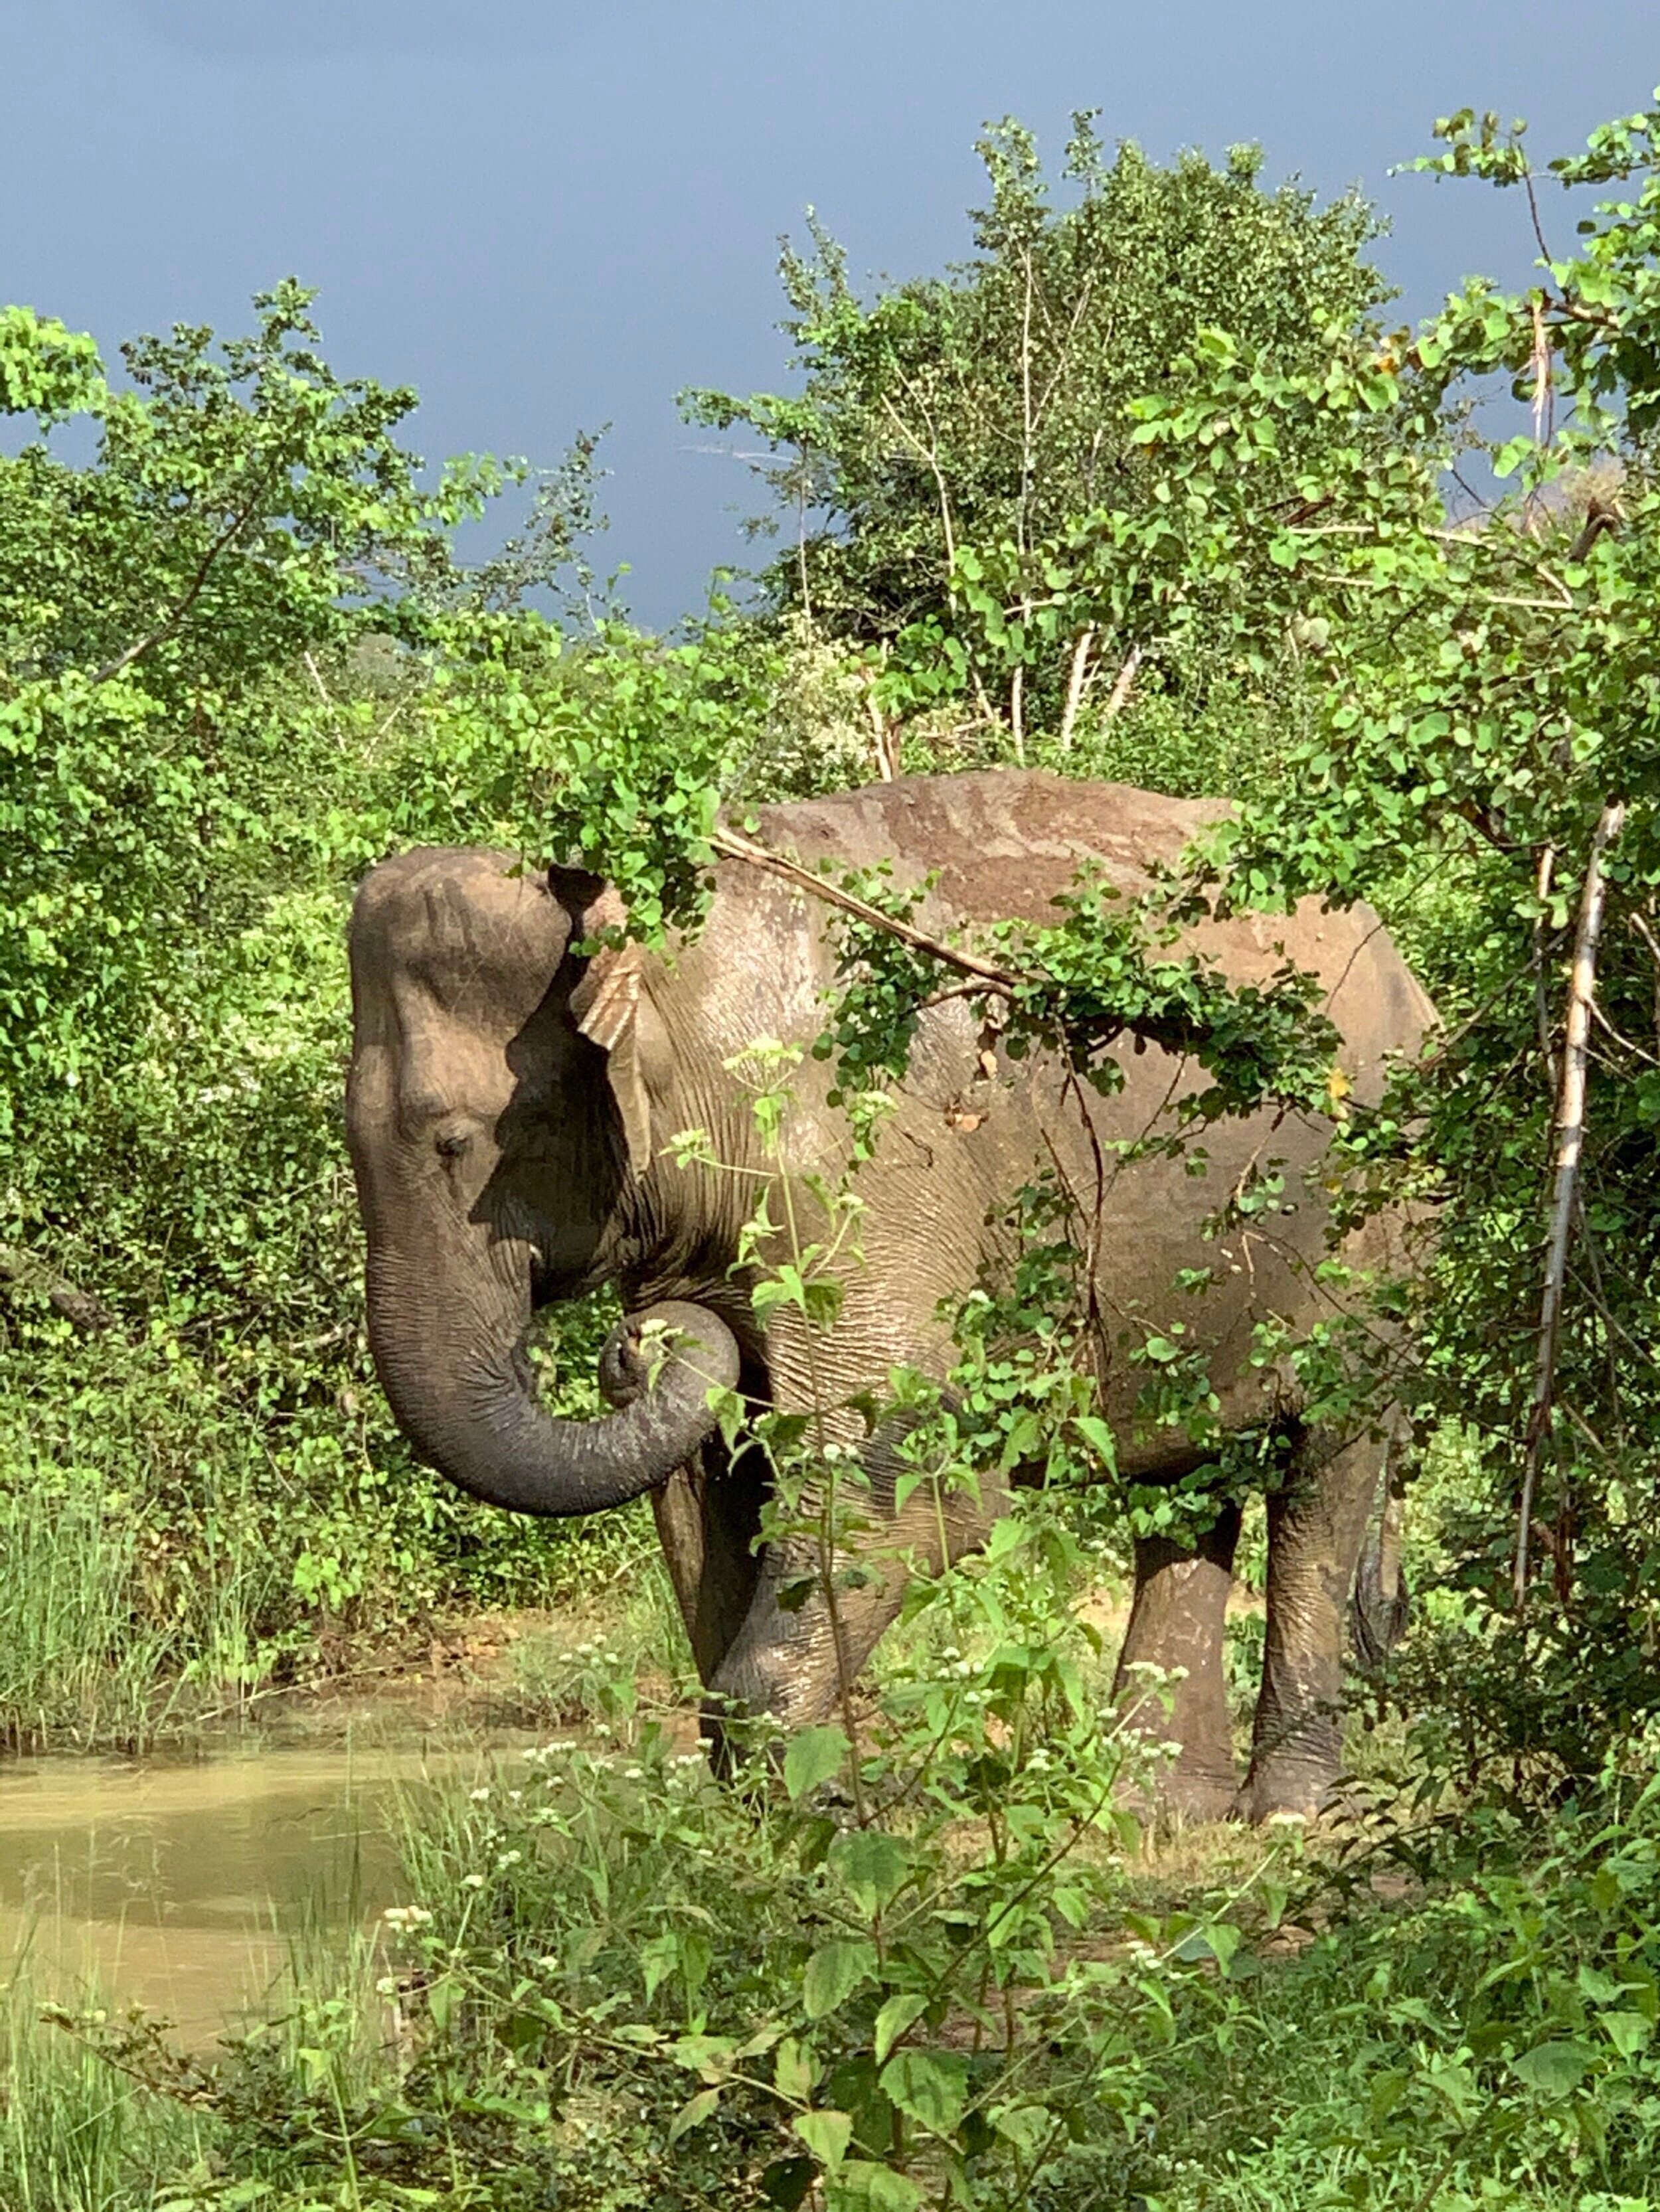 The female elephants were a little shy!